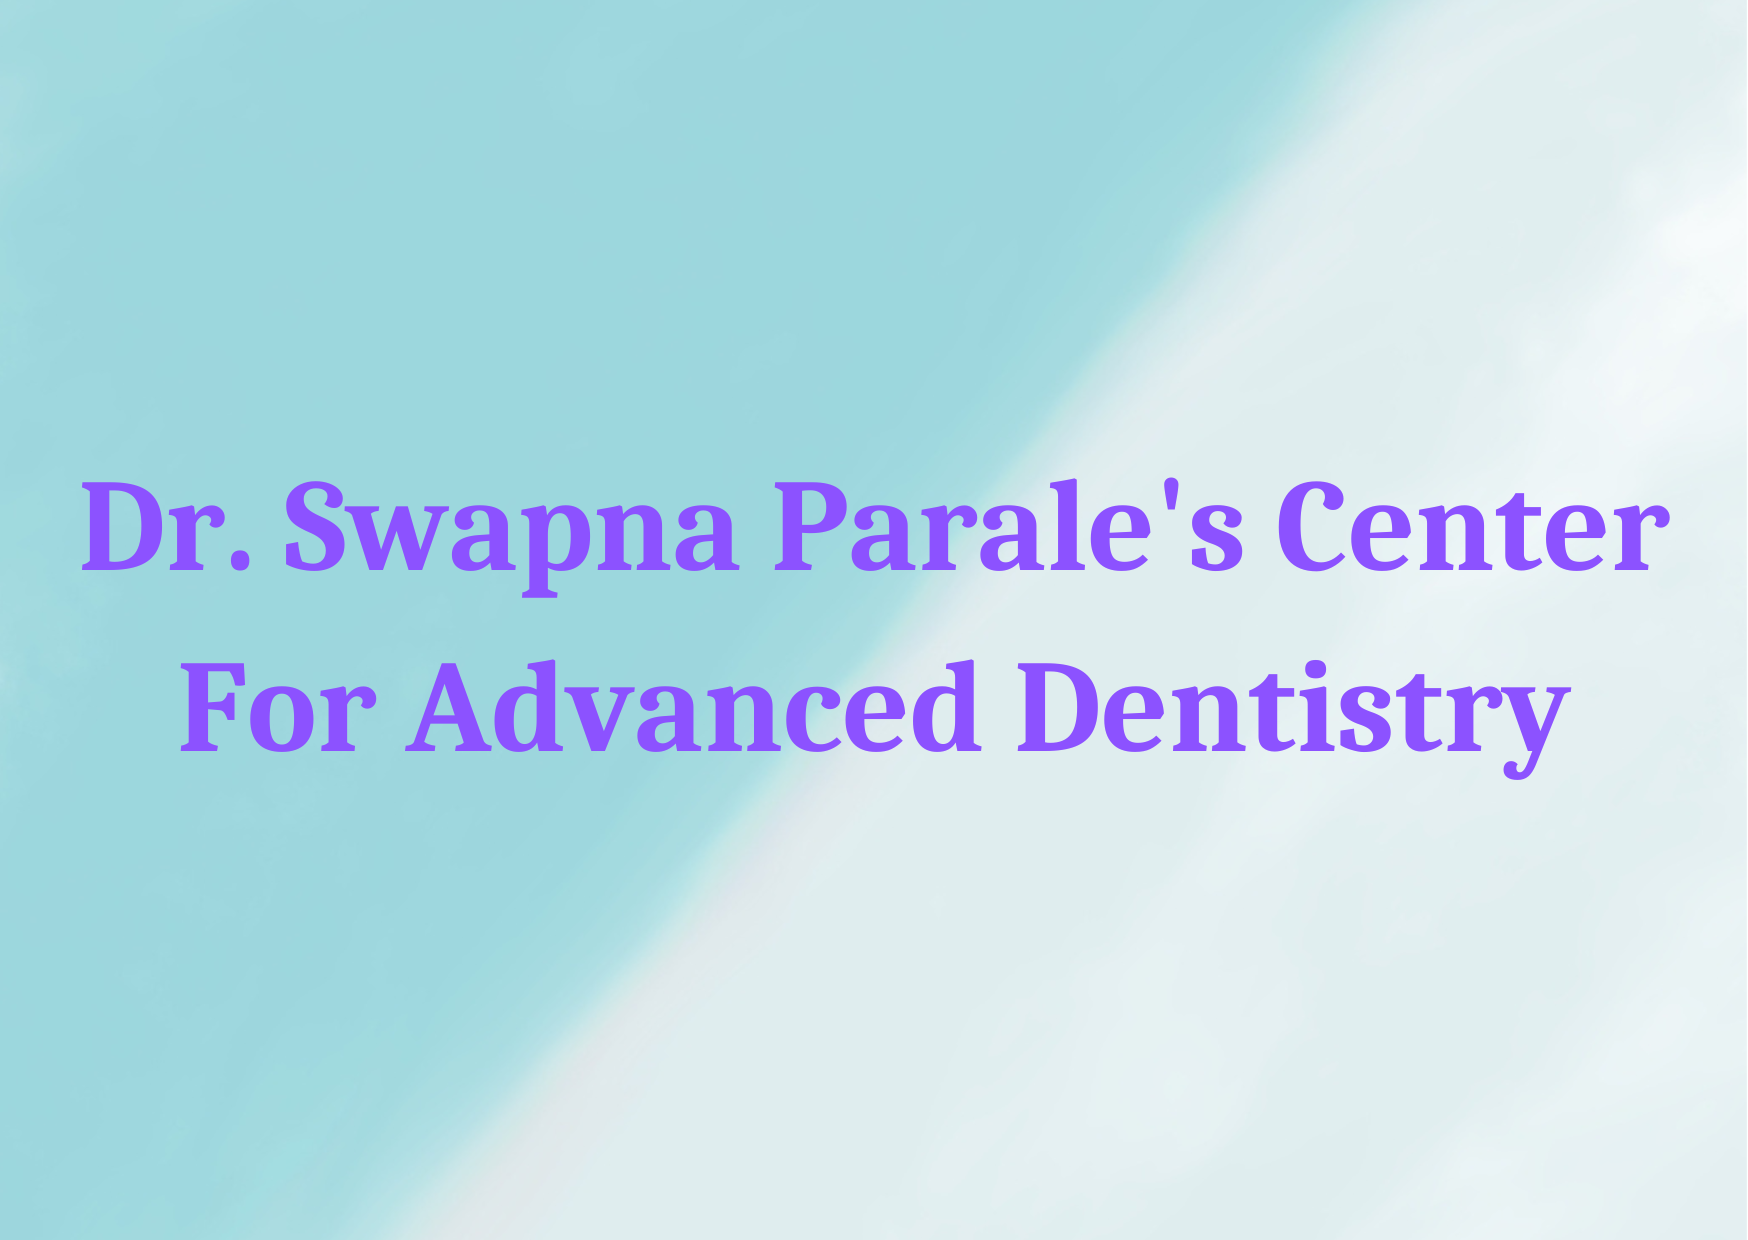 Dr. Swapna Parale's Center For Advanced Dentistry 